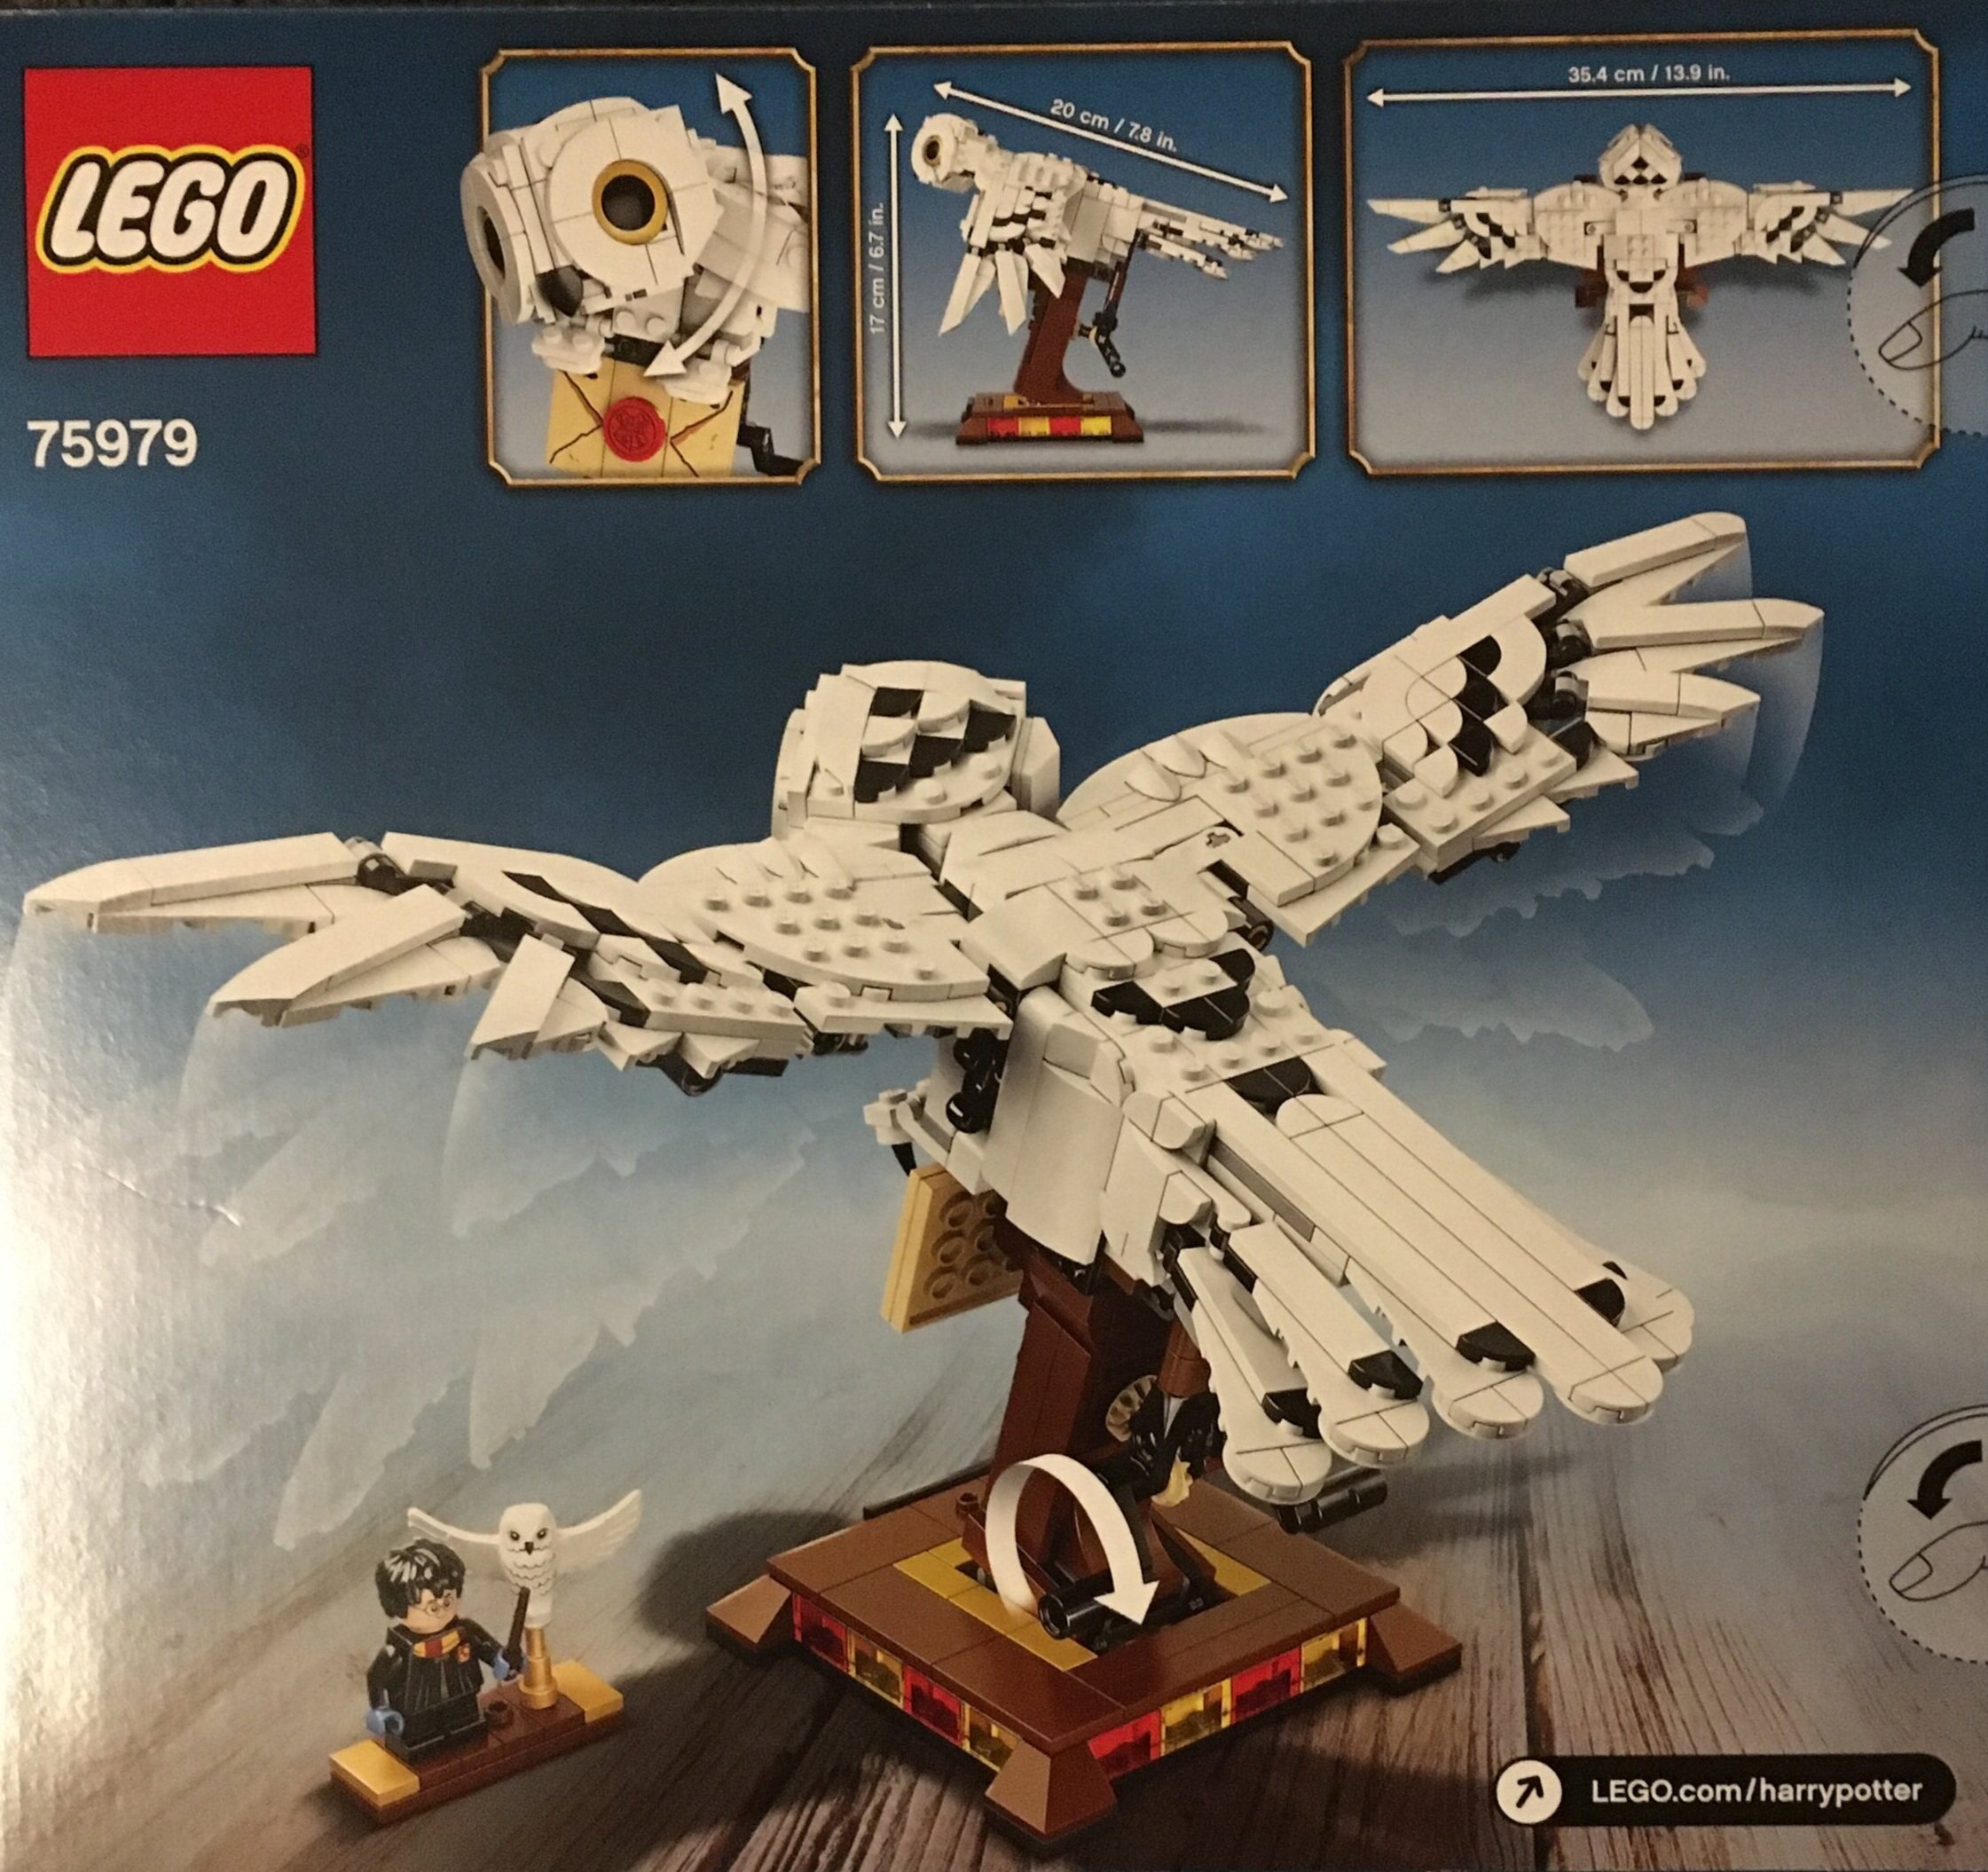 LEGO Harry Potter 75979 Hedwige